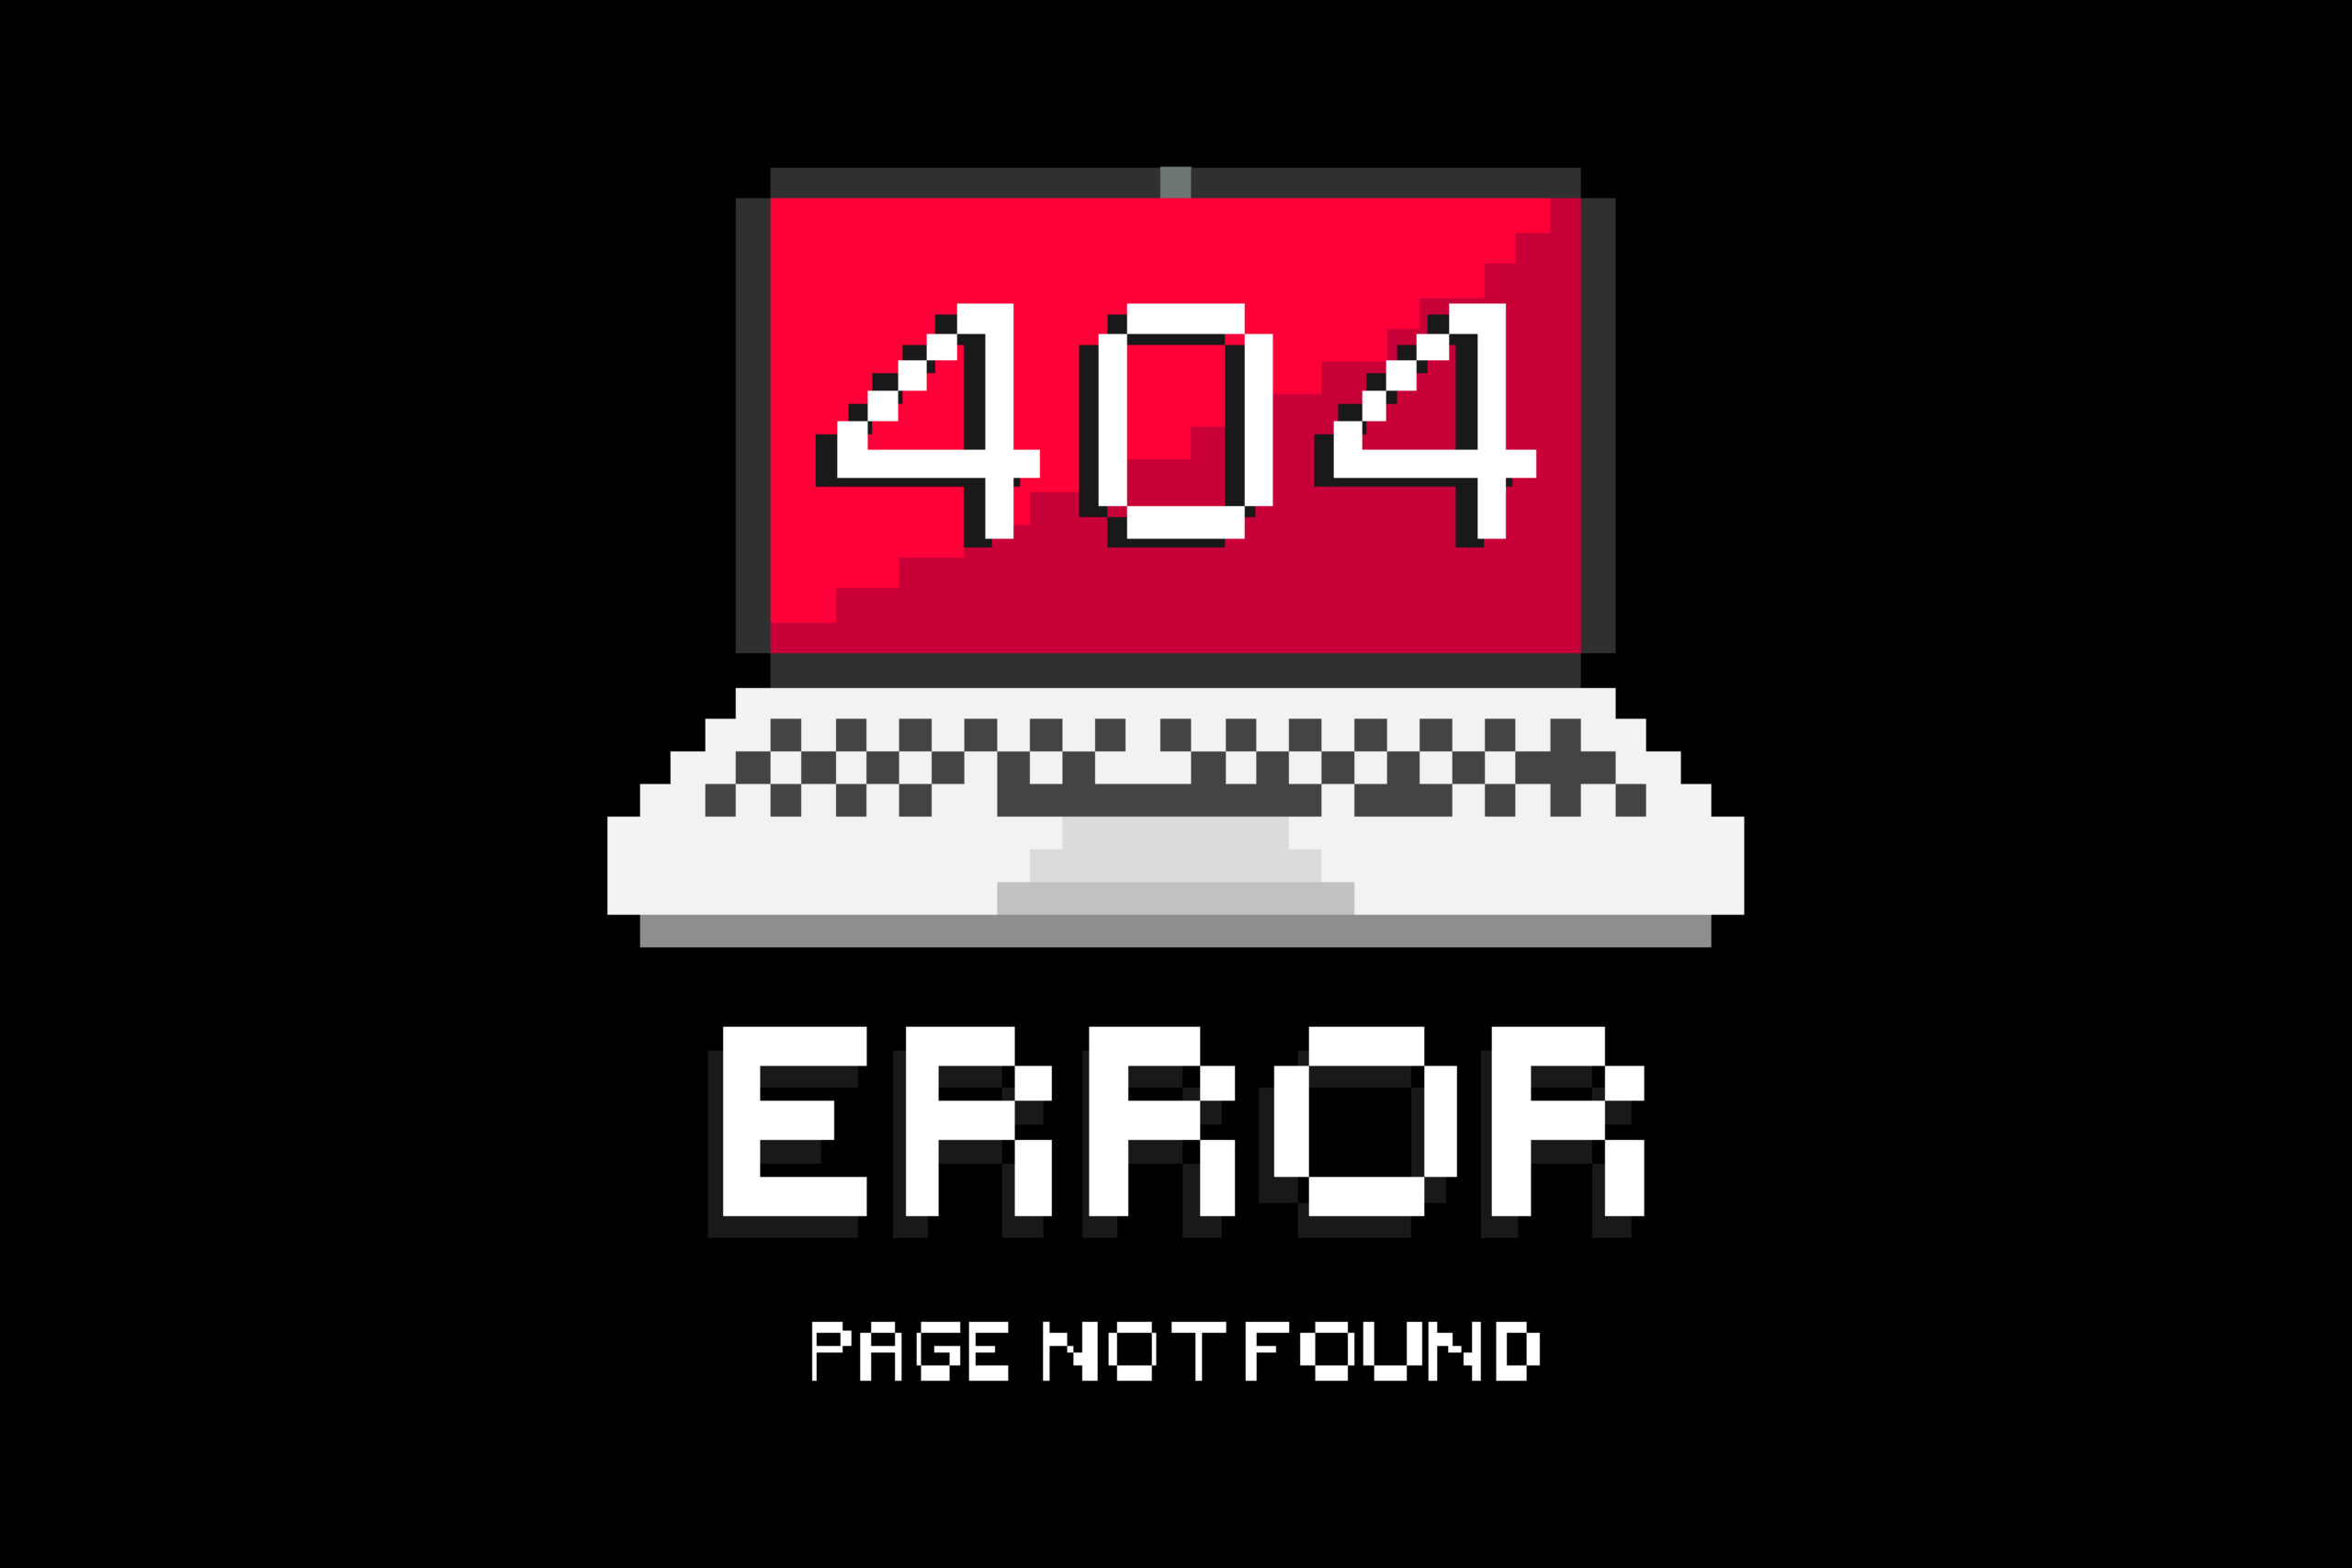 An 8-bit design of a 404 error page